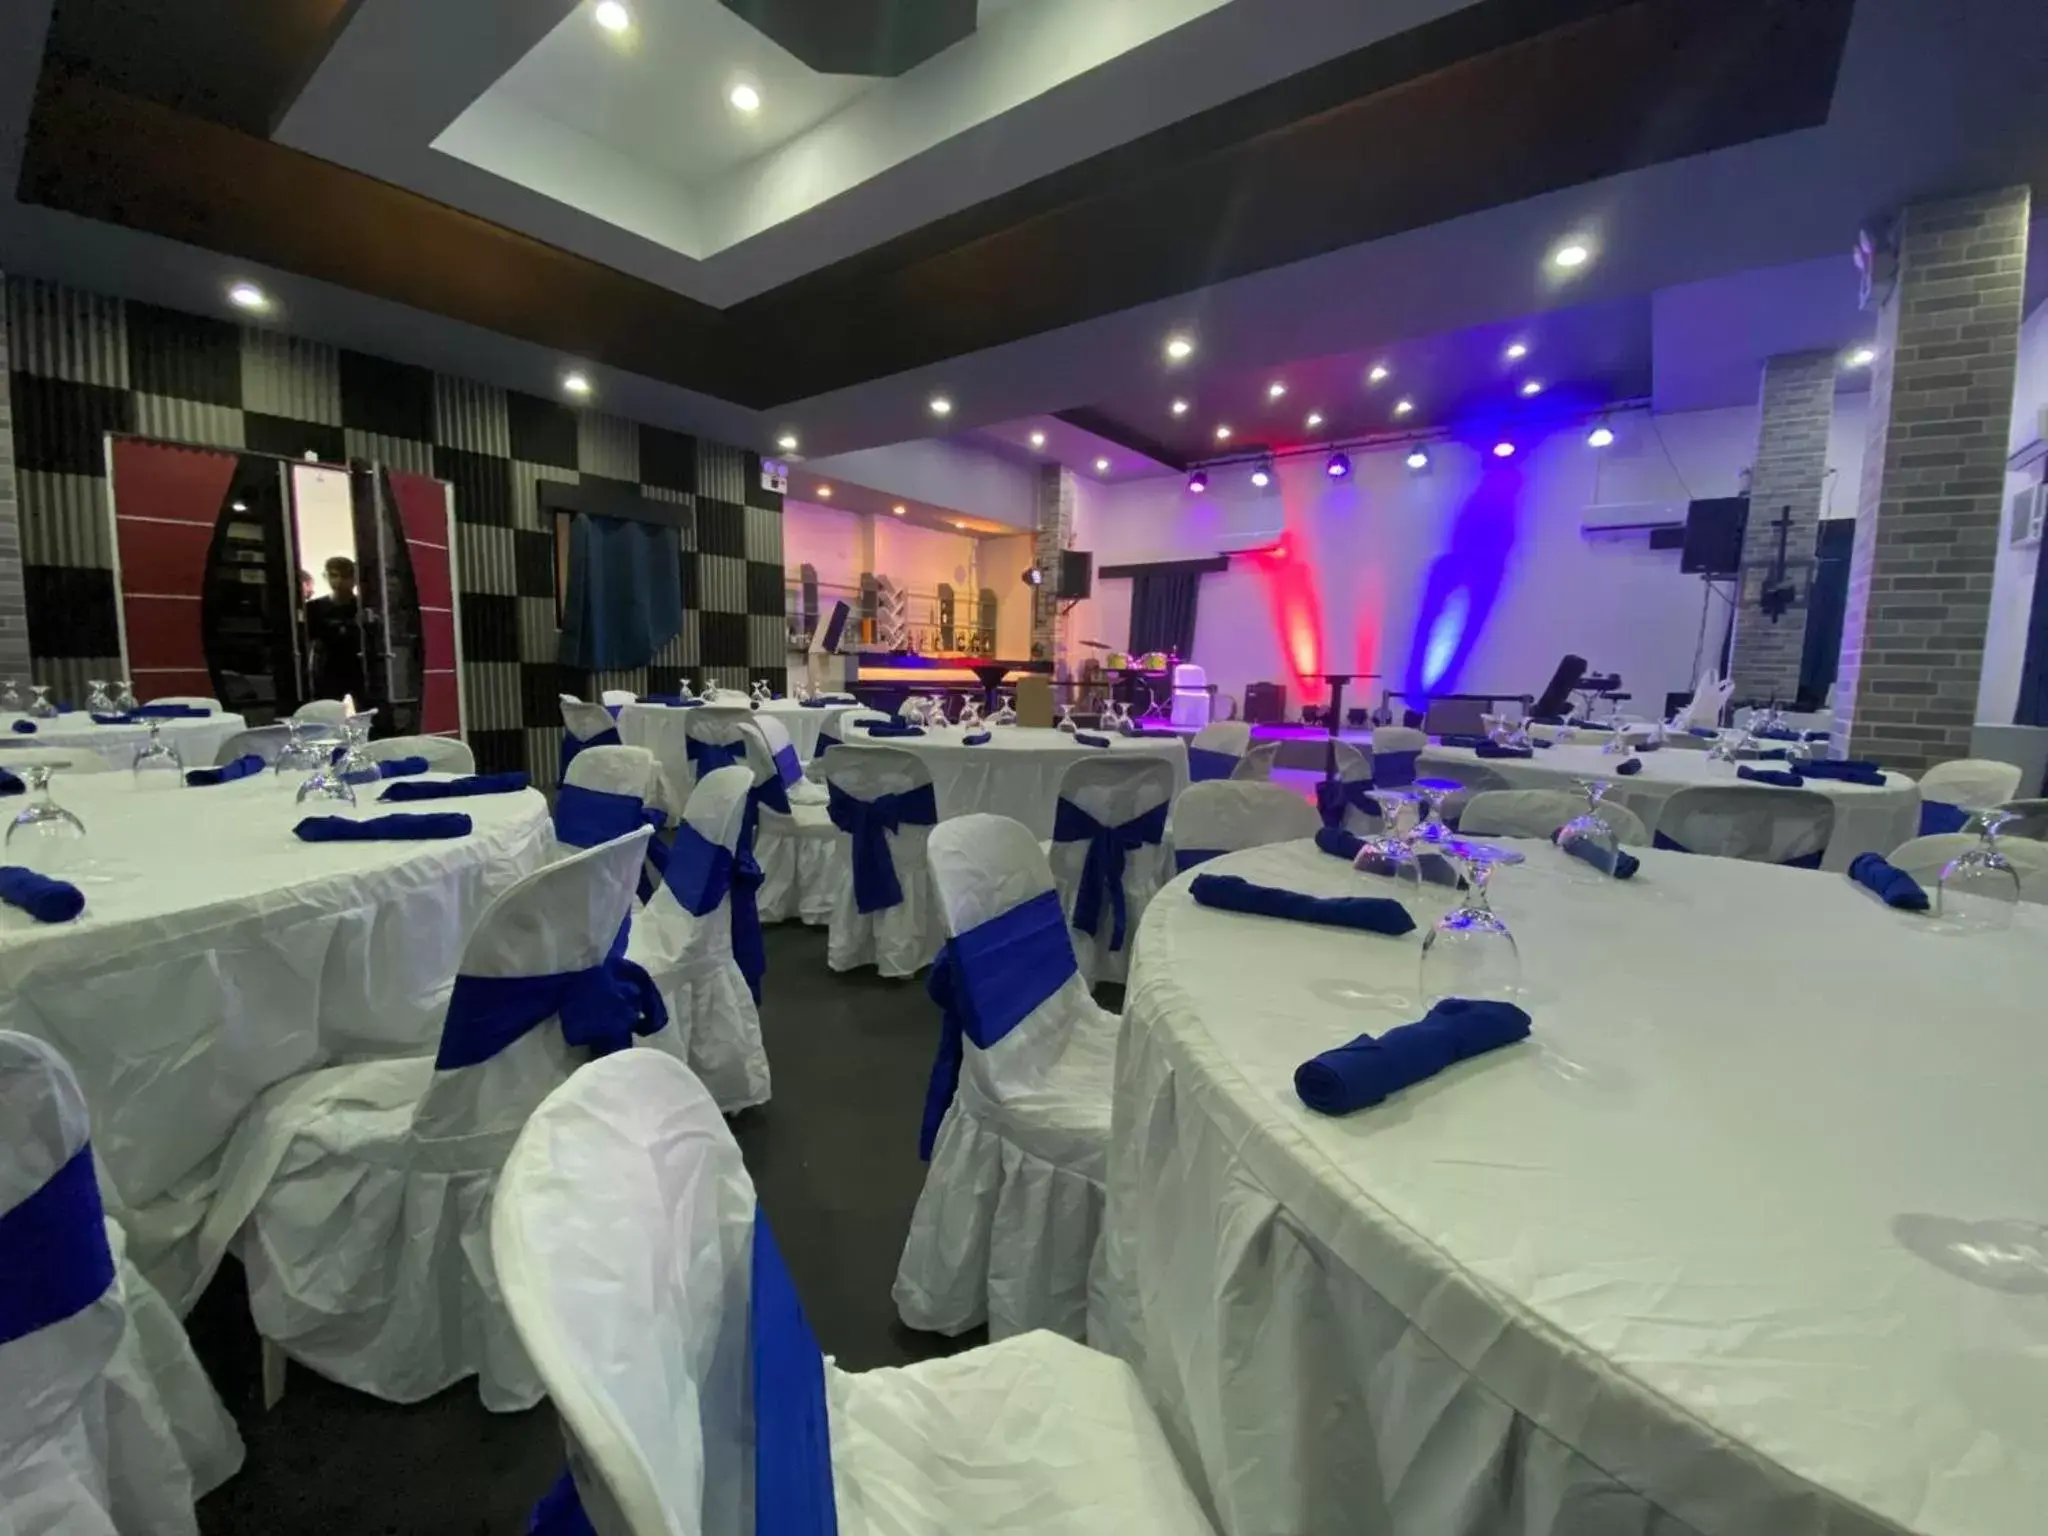 Banquet/Function facilities, Banquet Facilities in Skylodge Resort